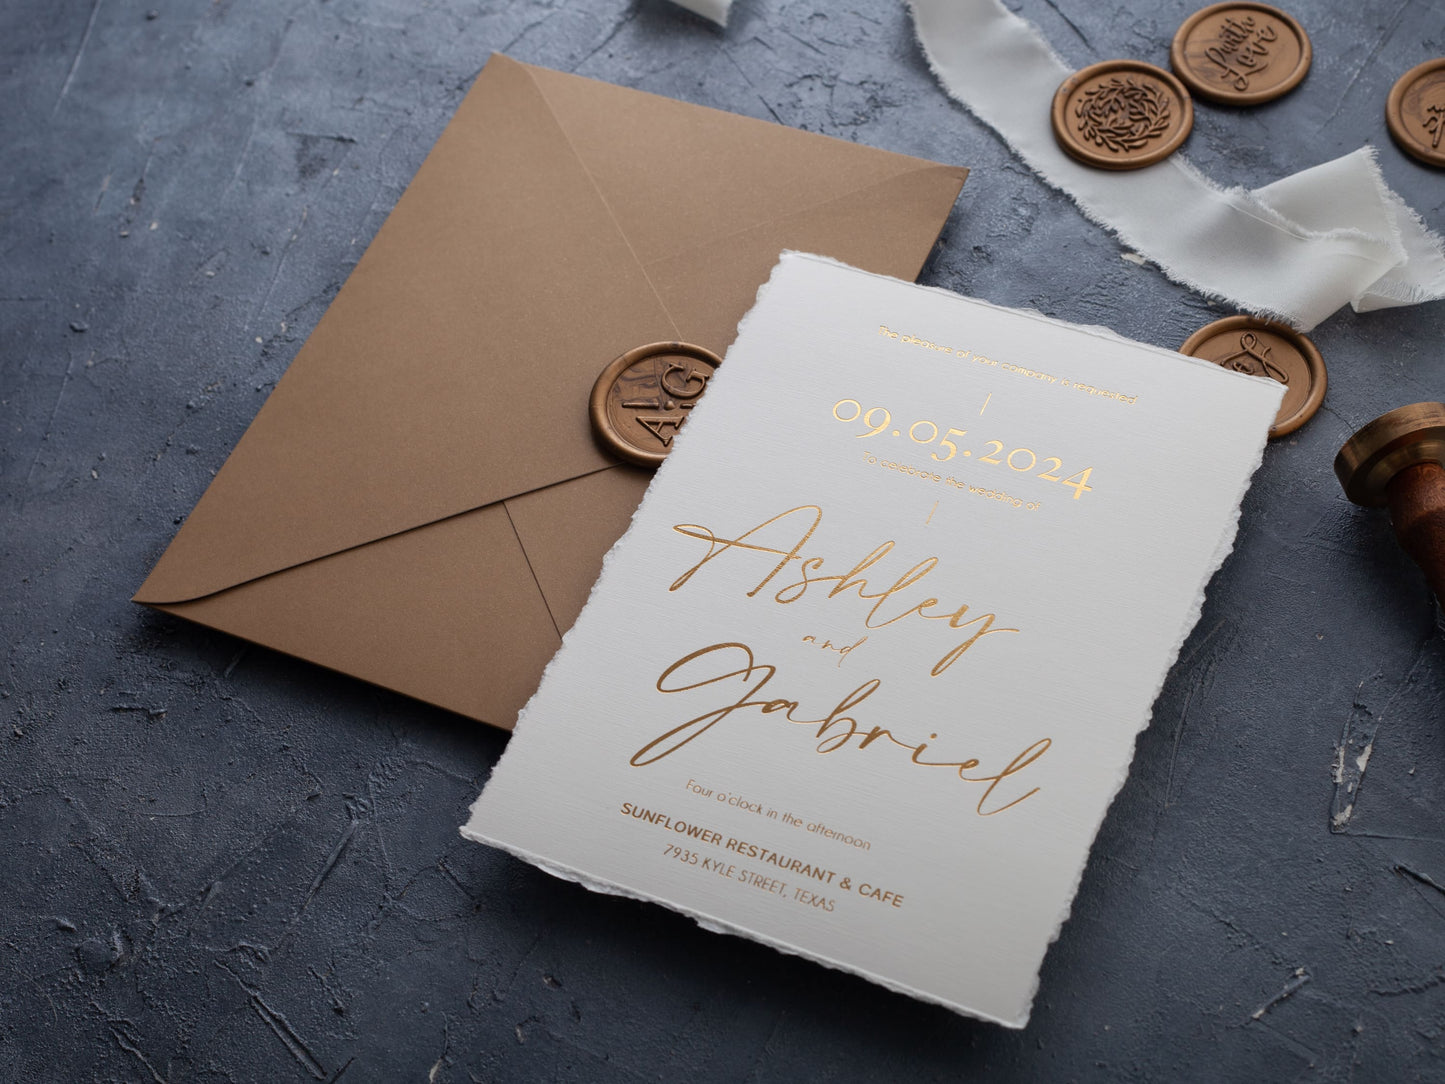 Deckled edge wedding invitation with gold foil details